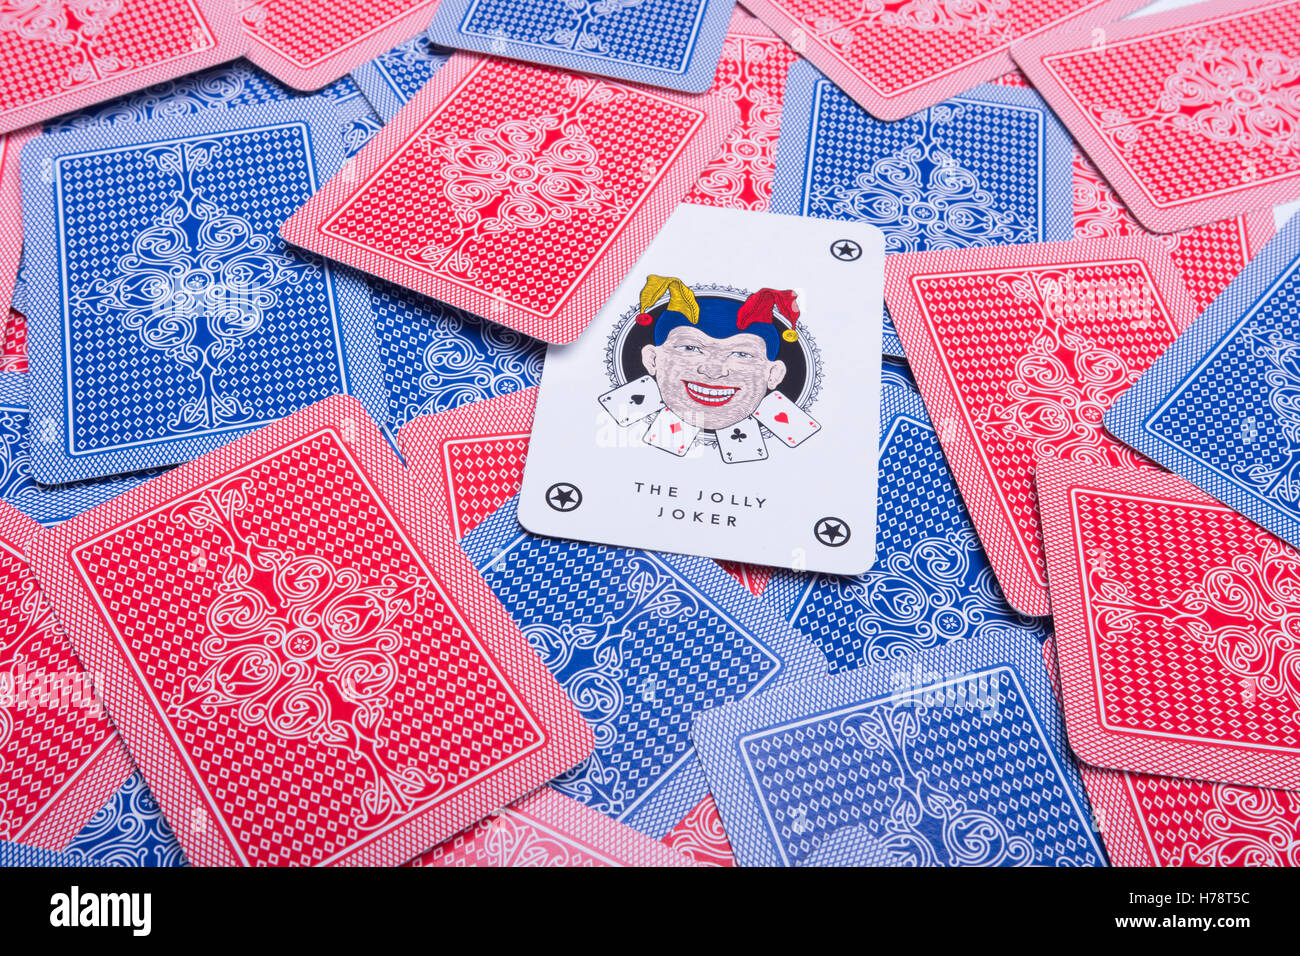 joker card among some playing cards Stock Photo